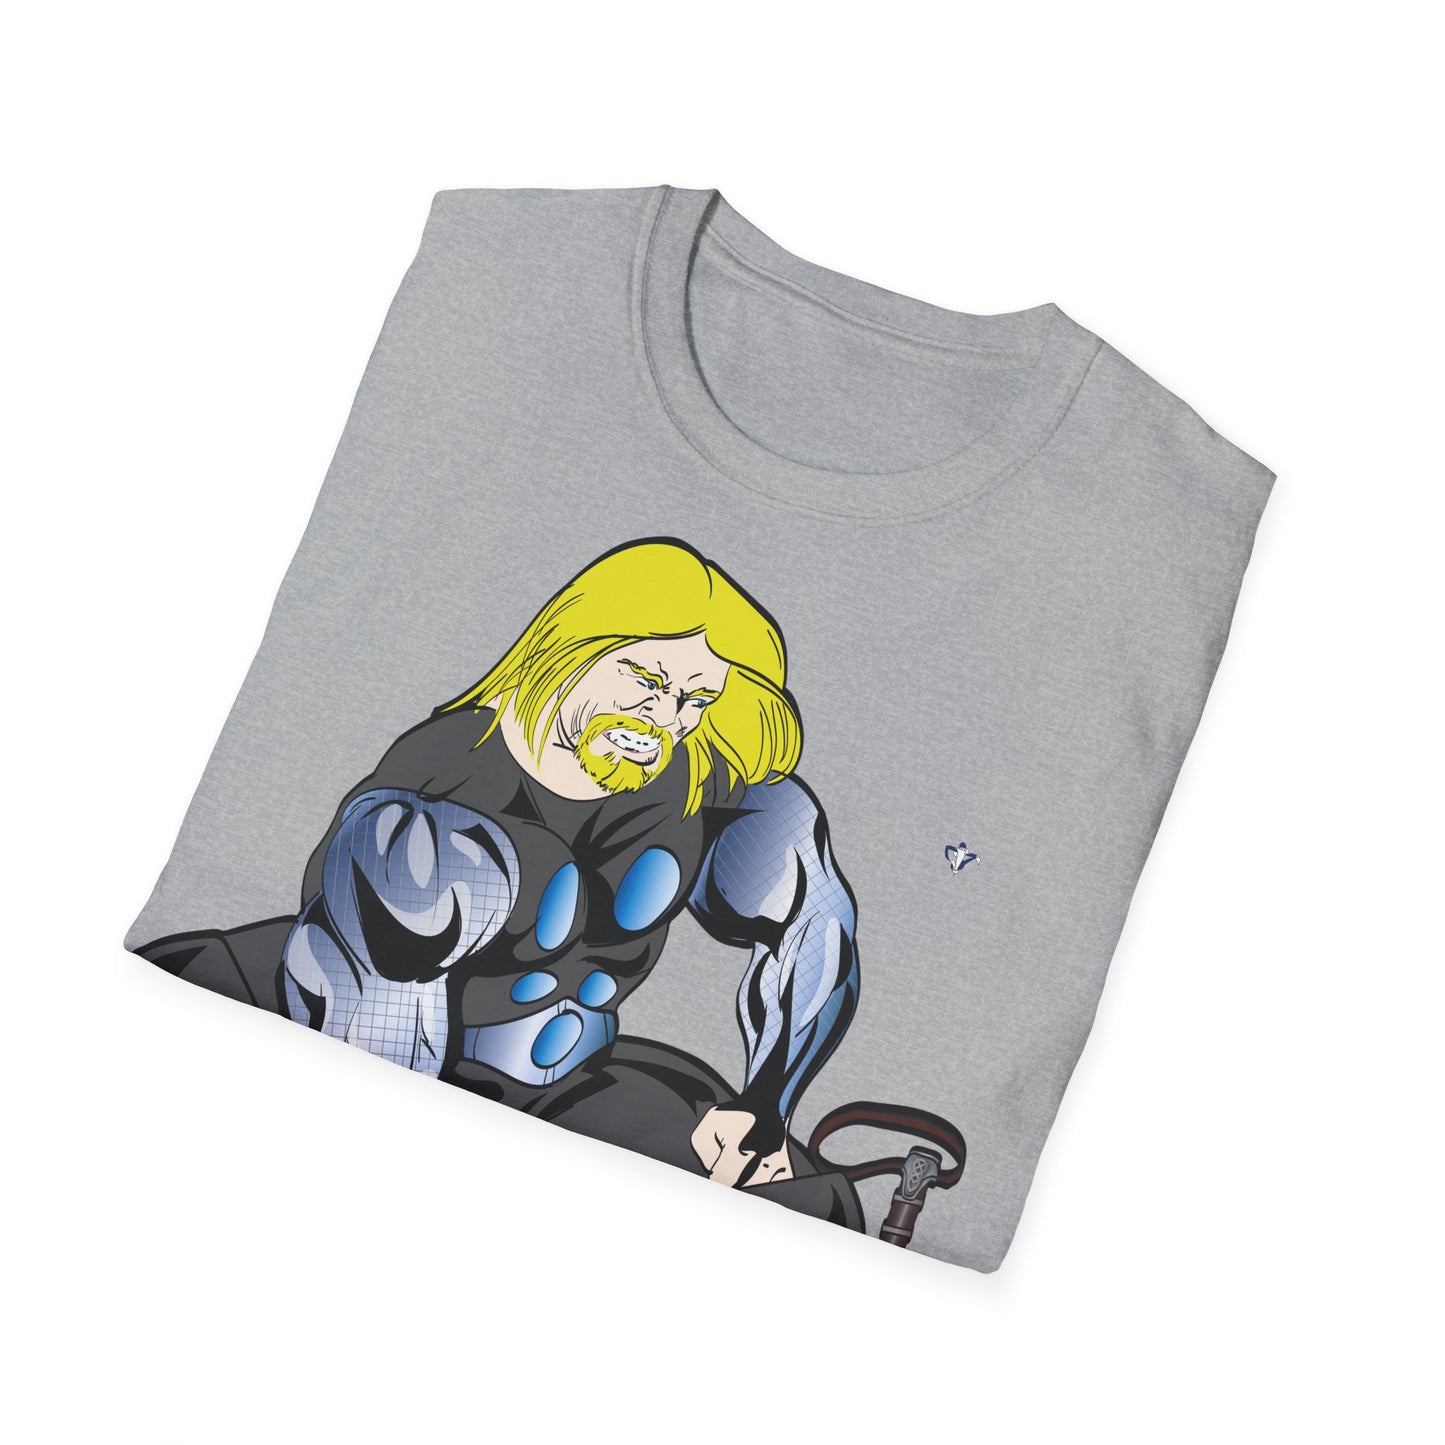 T-Shirt adulte mixte Thor muscu (à personnaliser)